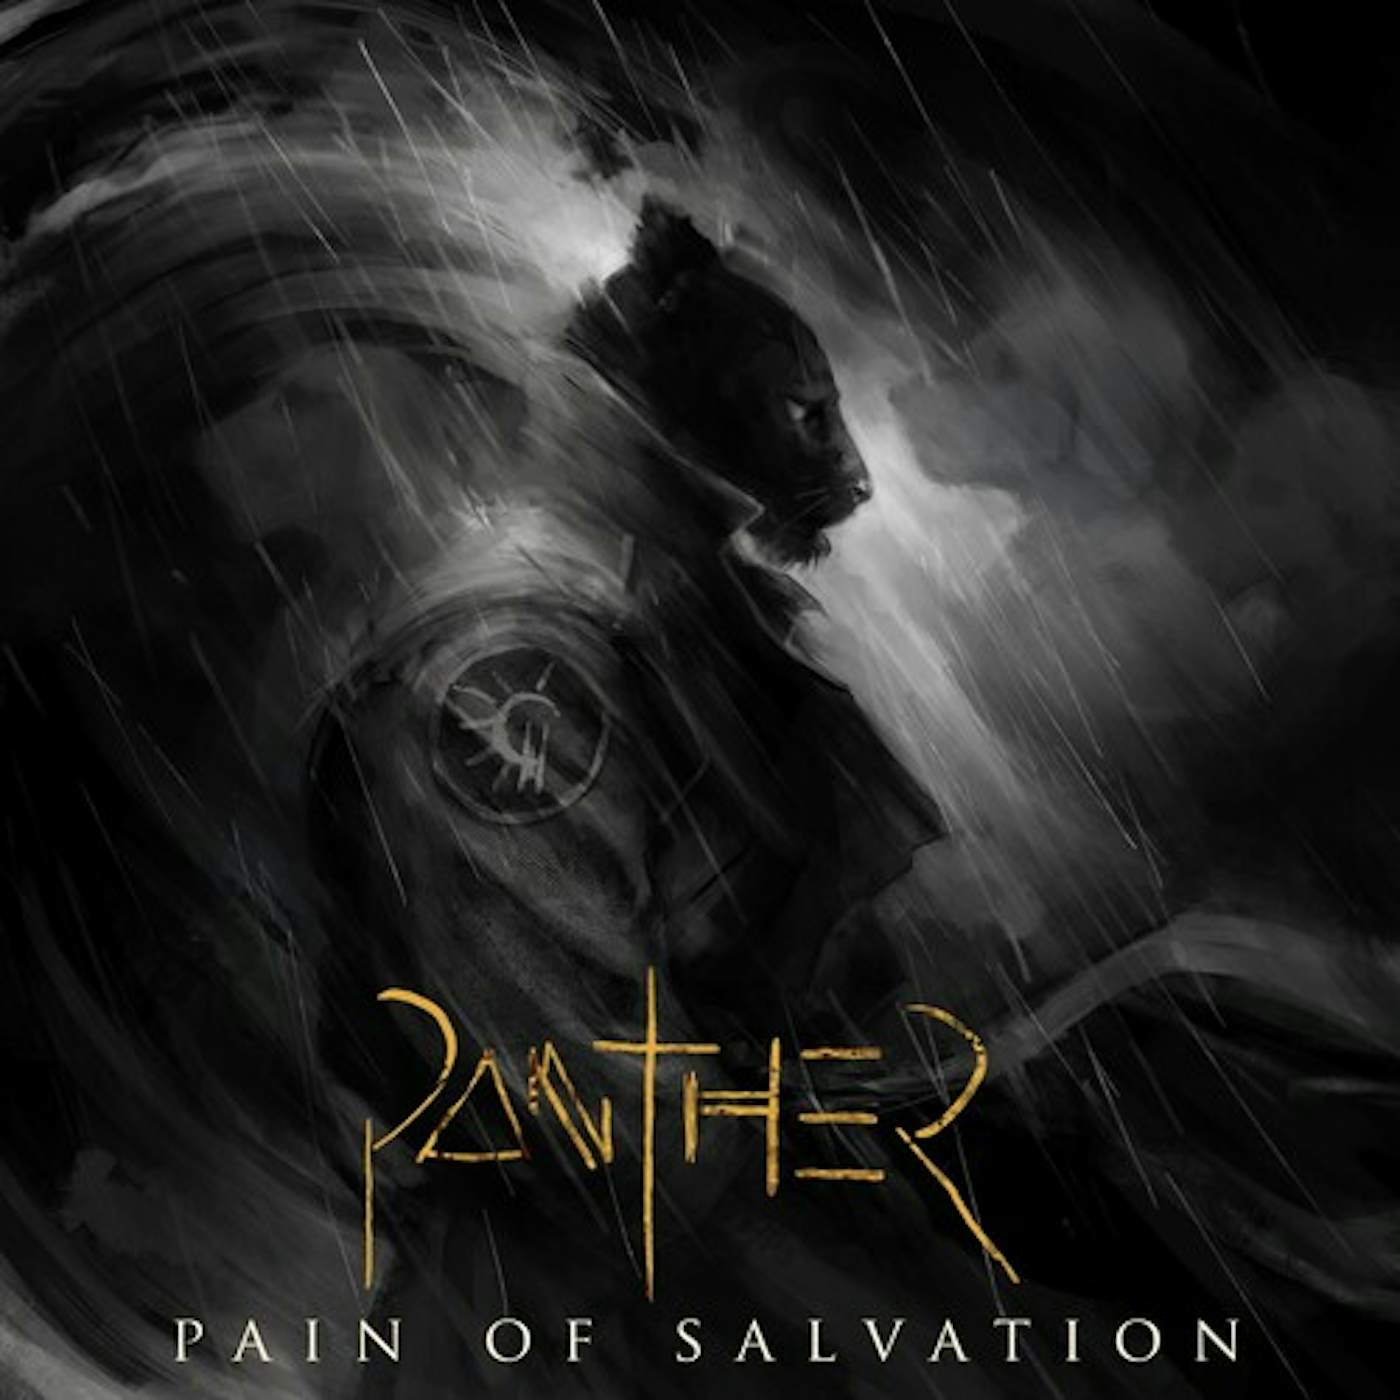 Pain of Salvation PANTHER CD